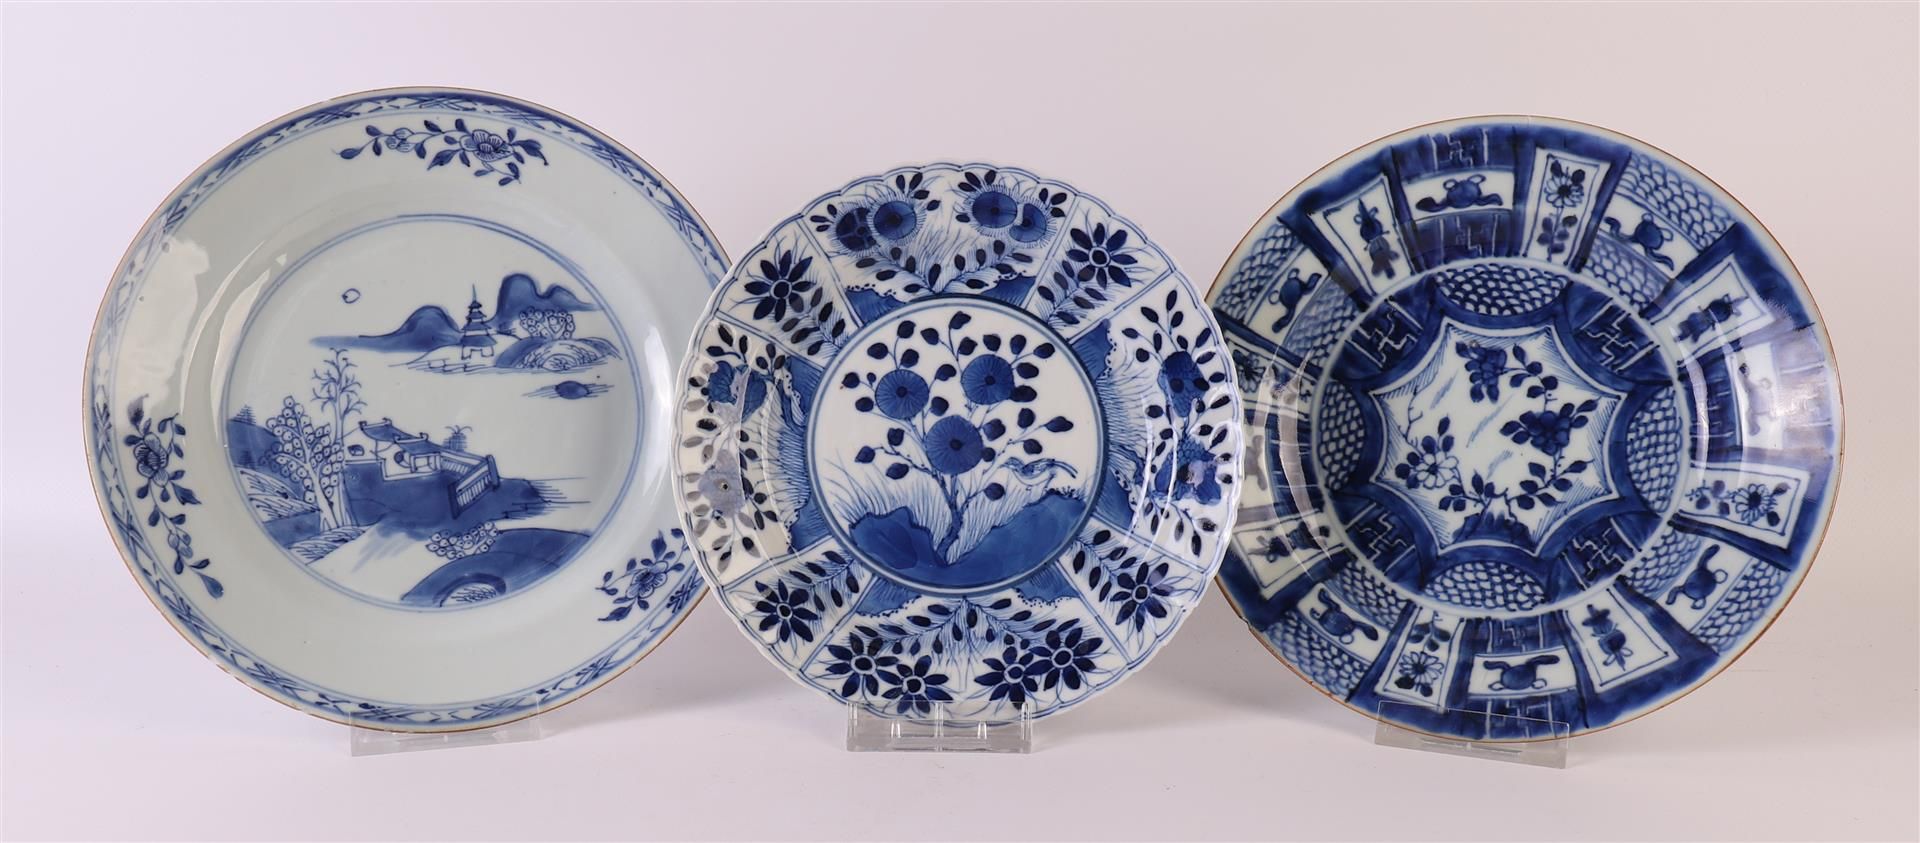 A contoured blue/white porcelain plate, China, 19th century. Blue underglaze decor, marked with